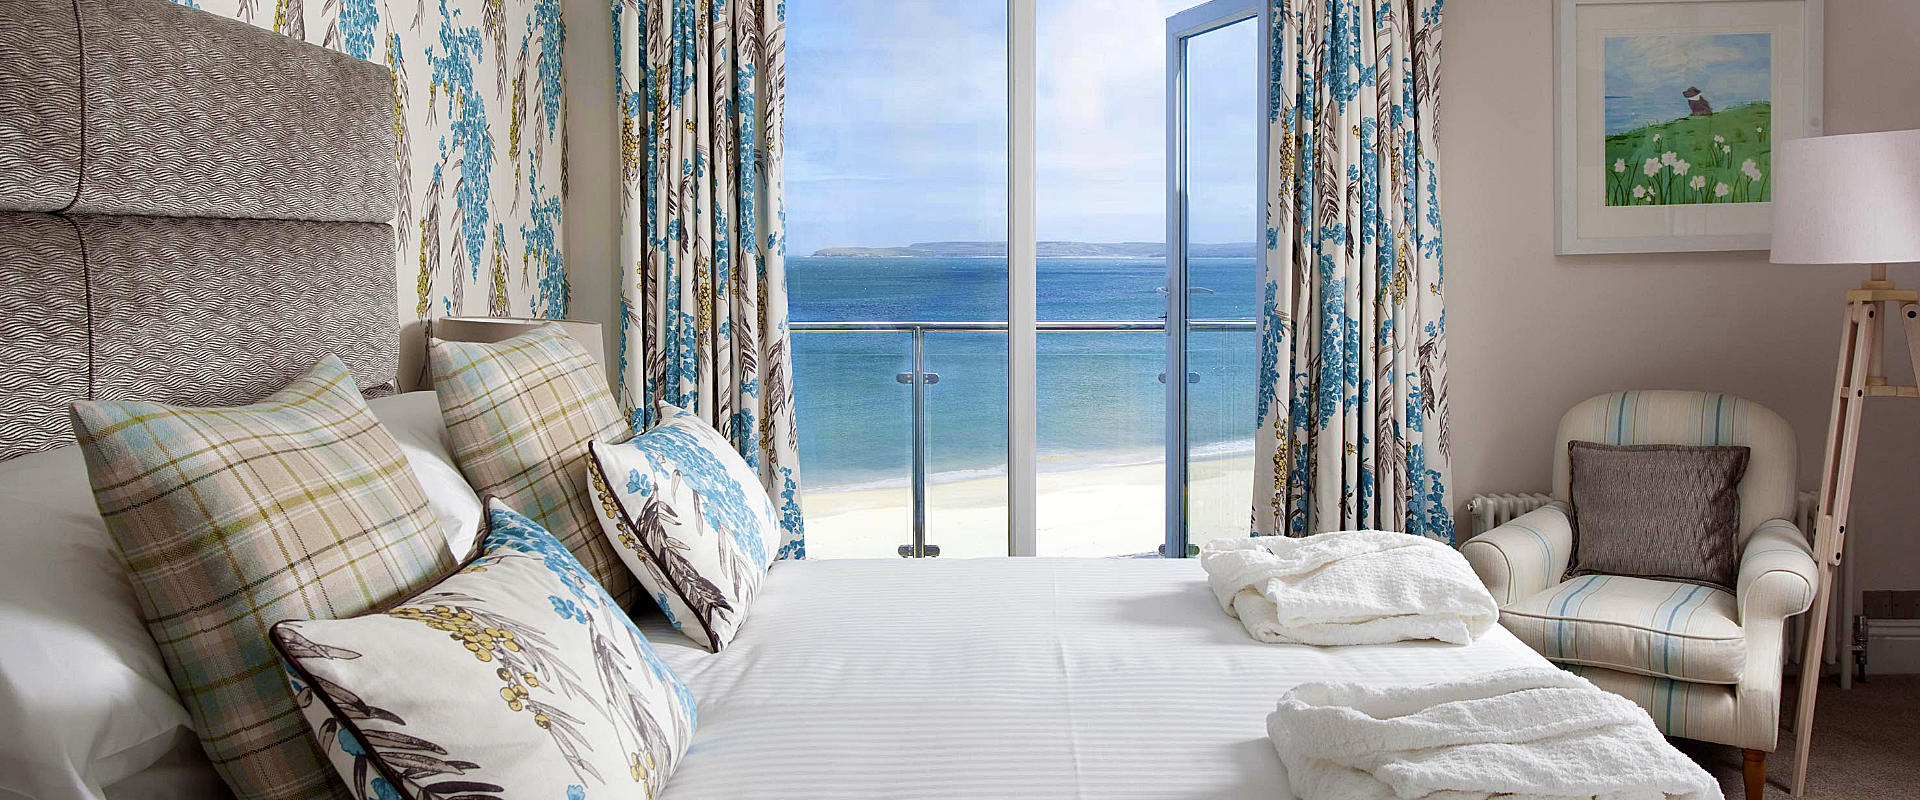 Urlaub in Cornwall im Strand Hotel St Ives